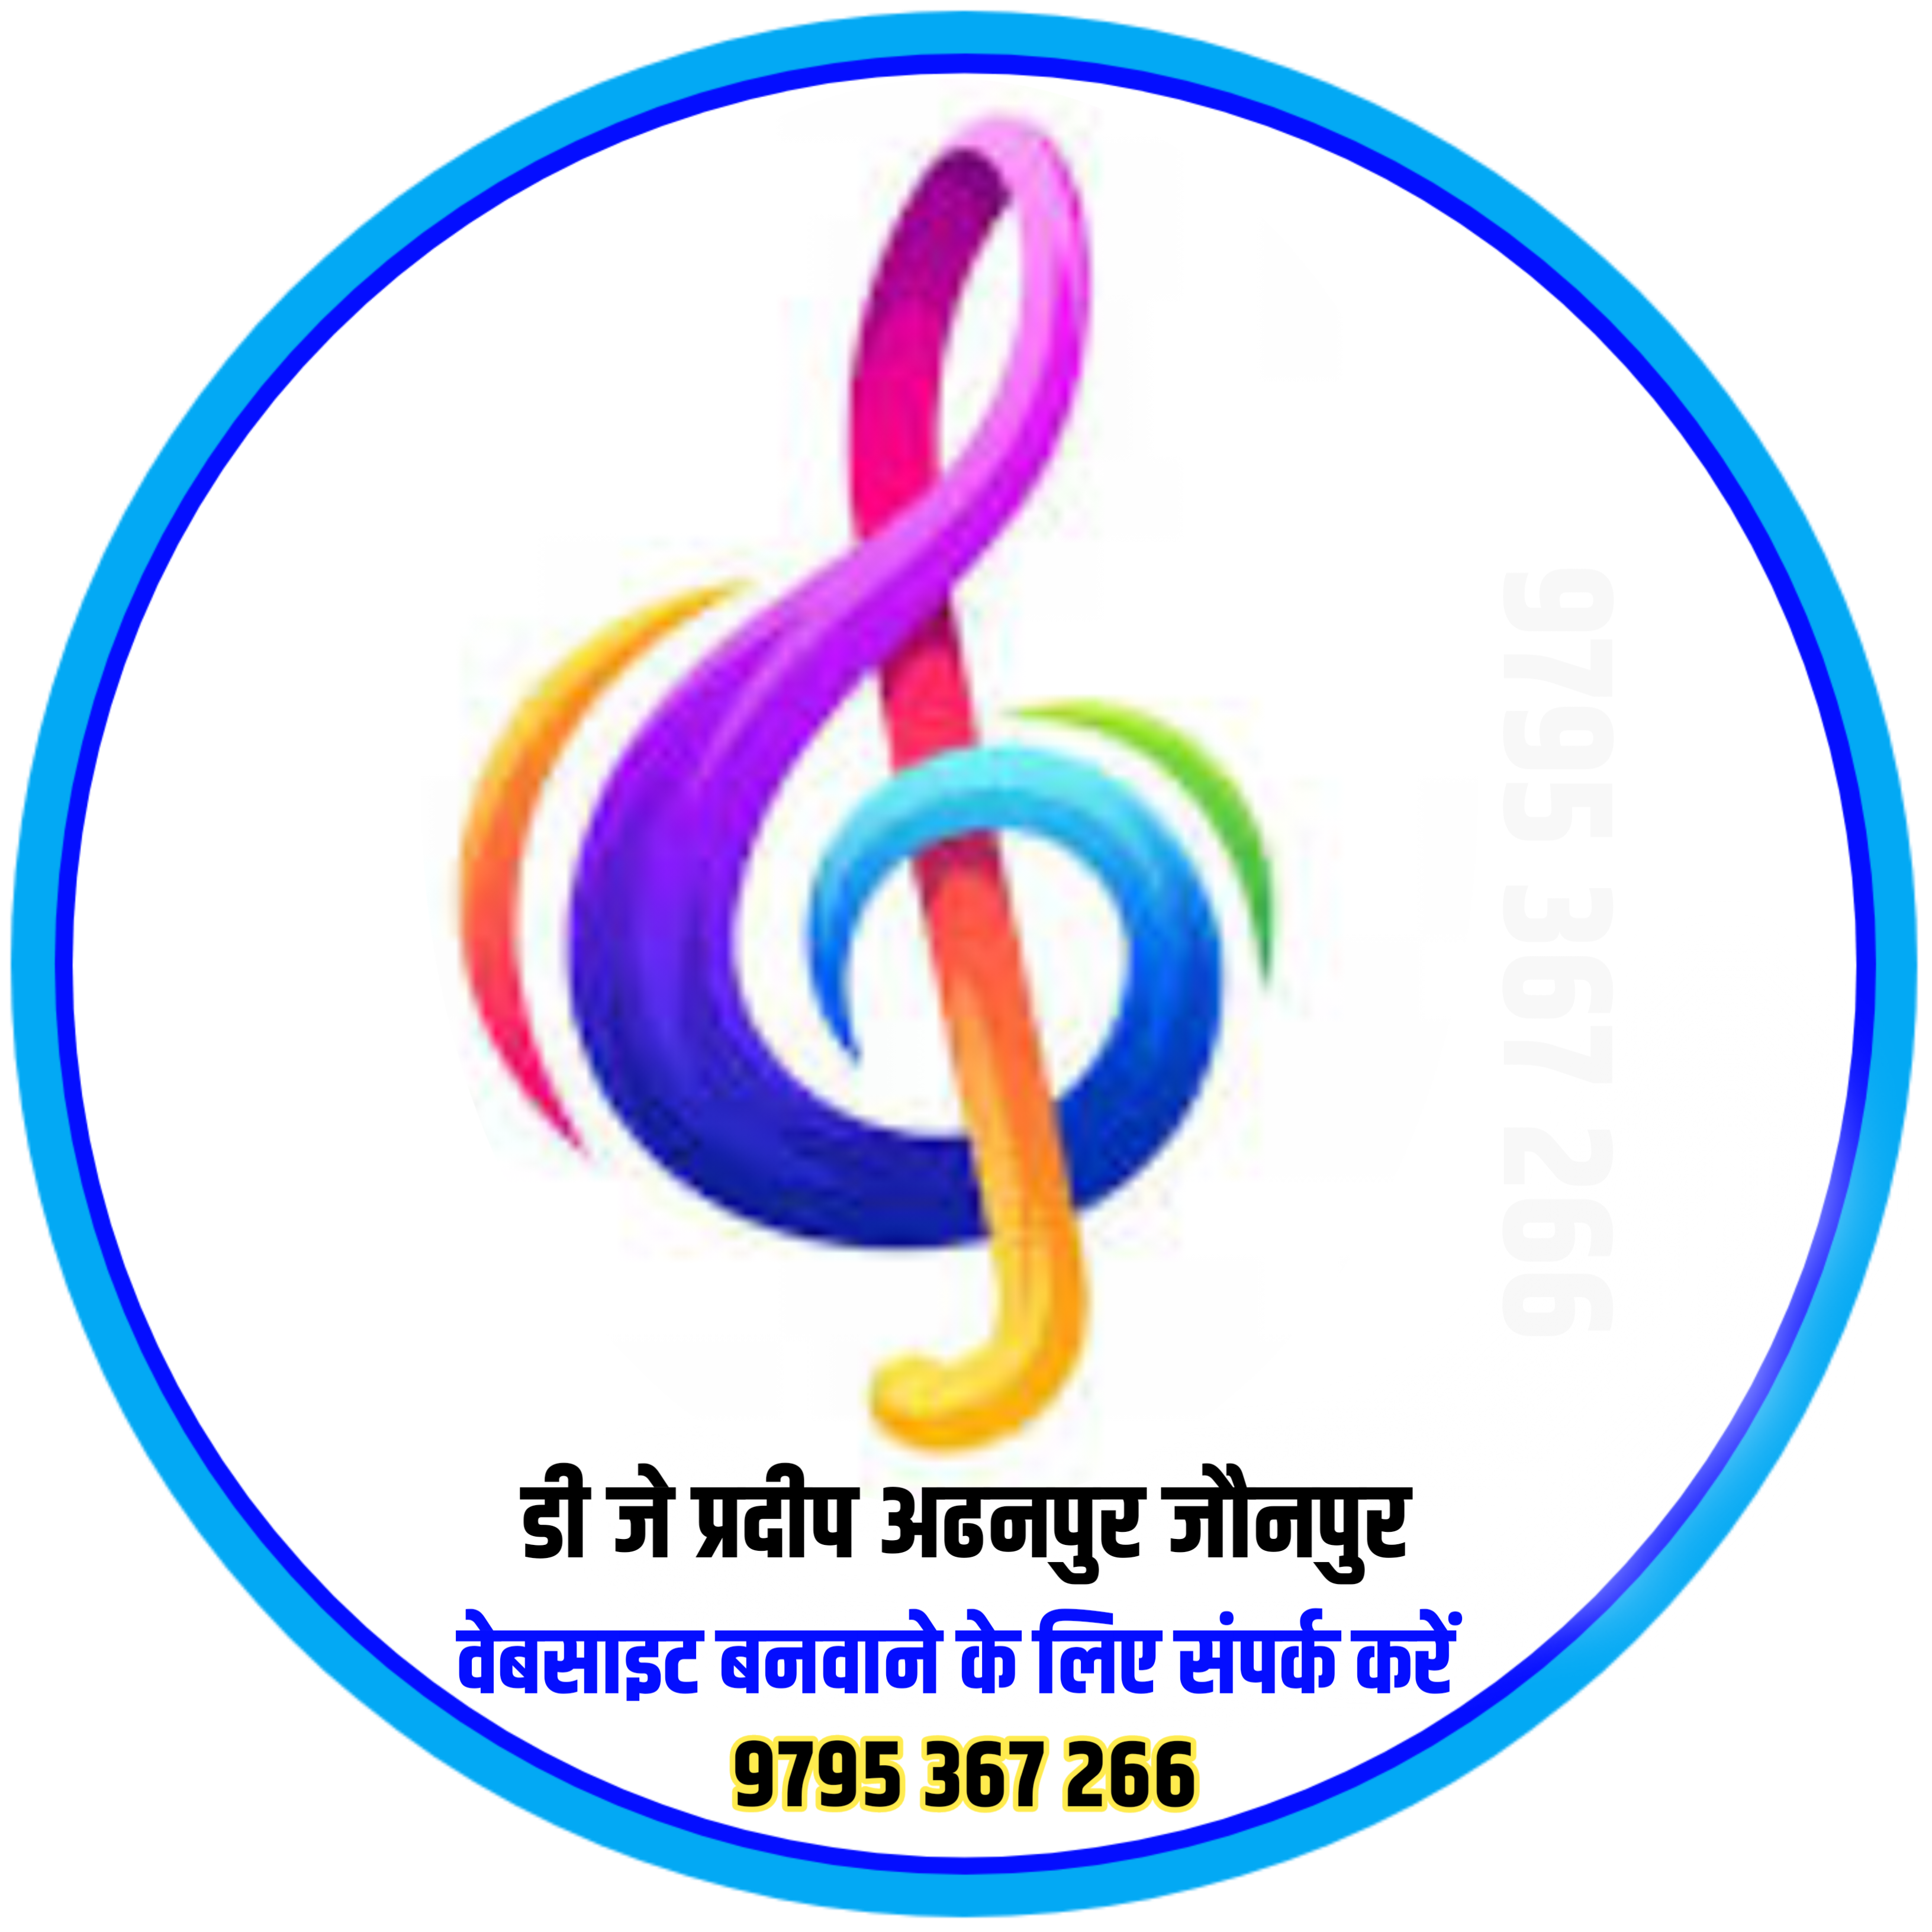 Lover Bana La Permanent Roushan Raja Edm Remix Dj Bhojpuri Remix Songs Dj Darshan RajBhar